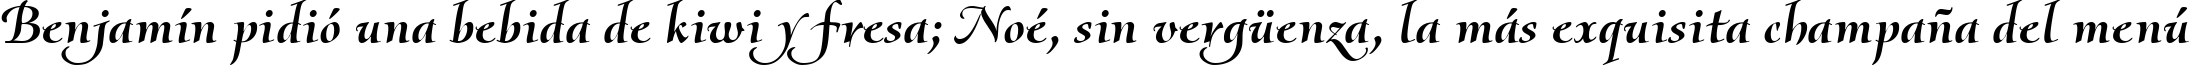 Пример написания шрифтом Olietta script BoldItalic текста на испанском